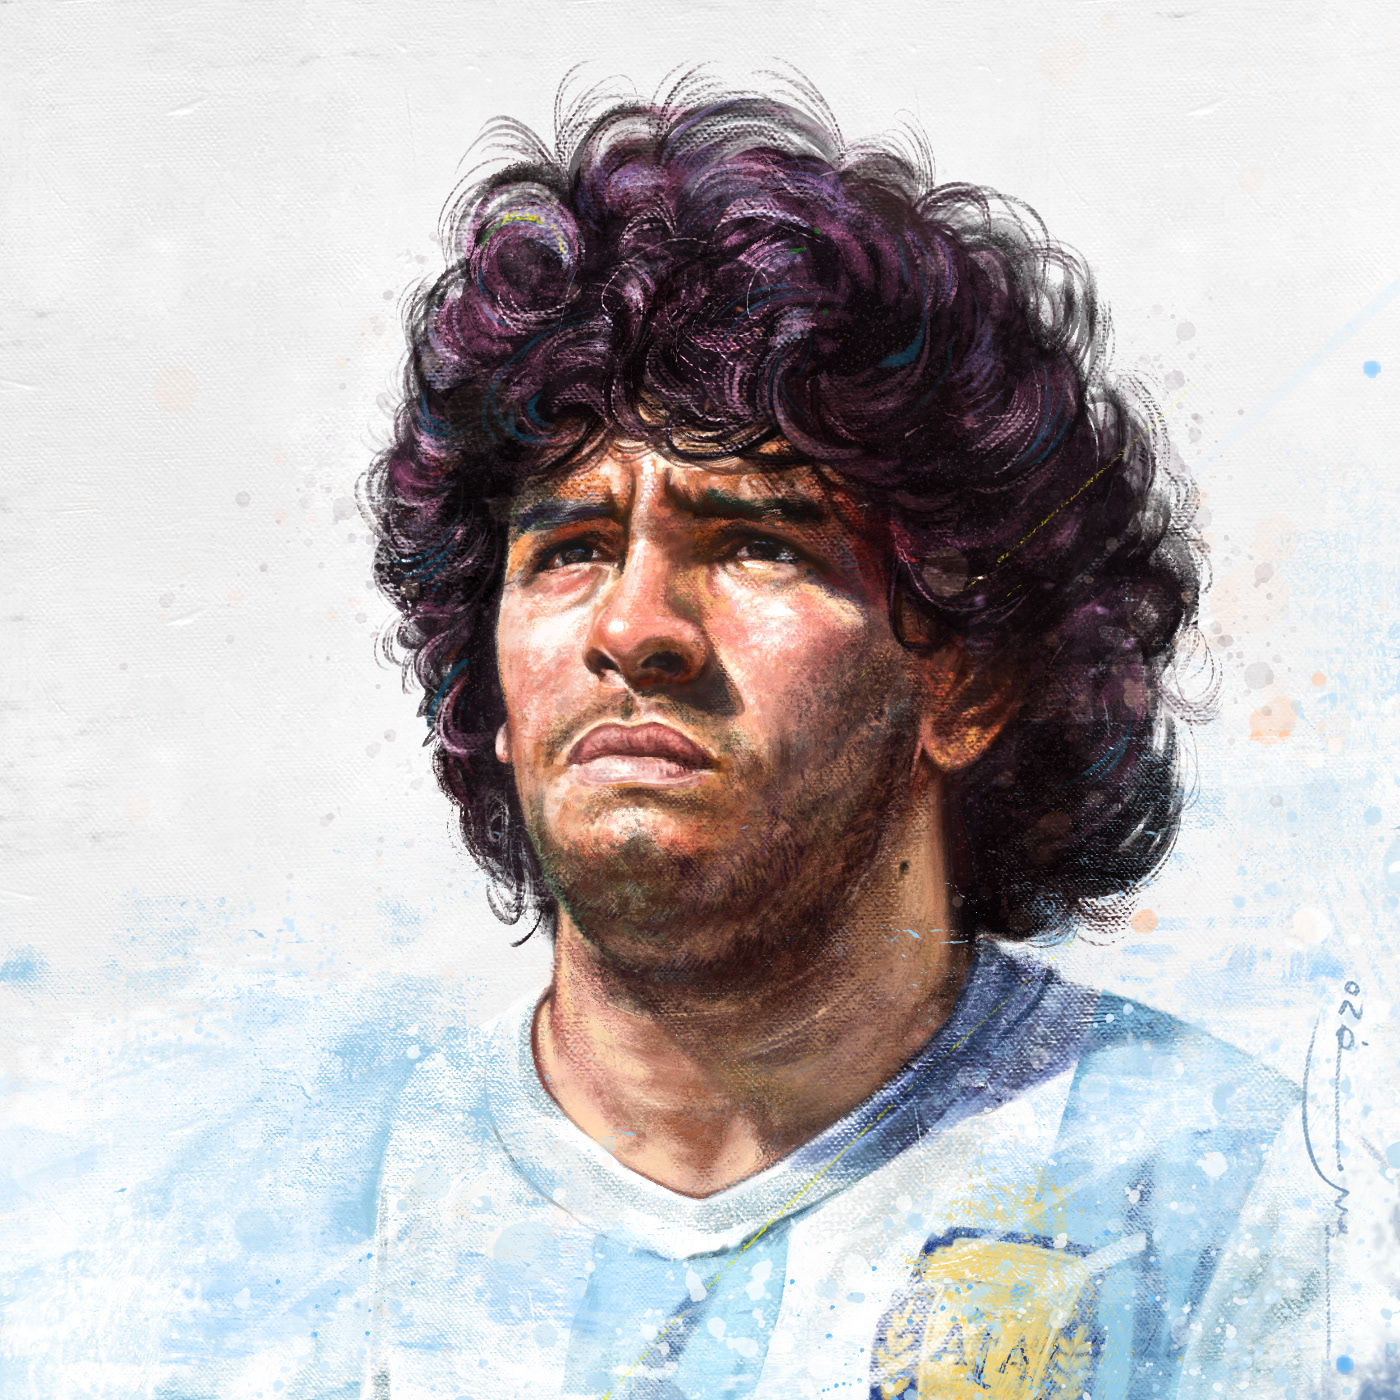 argentina argentine Diego Maradona footballer greatest Hand of God legend maradona